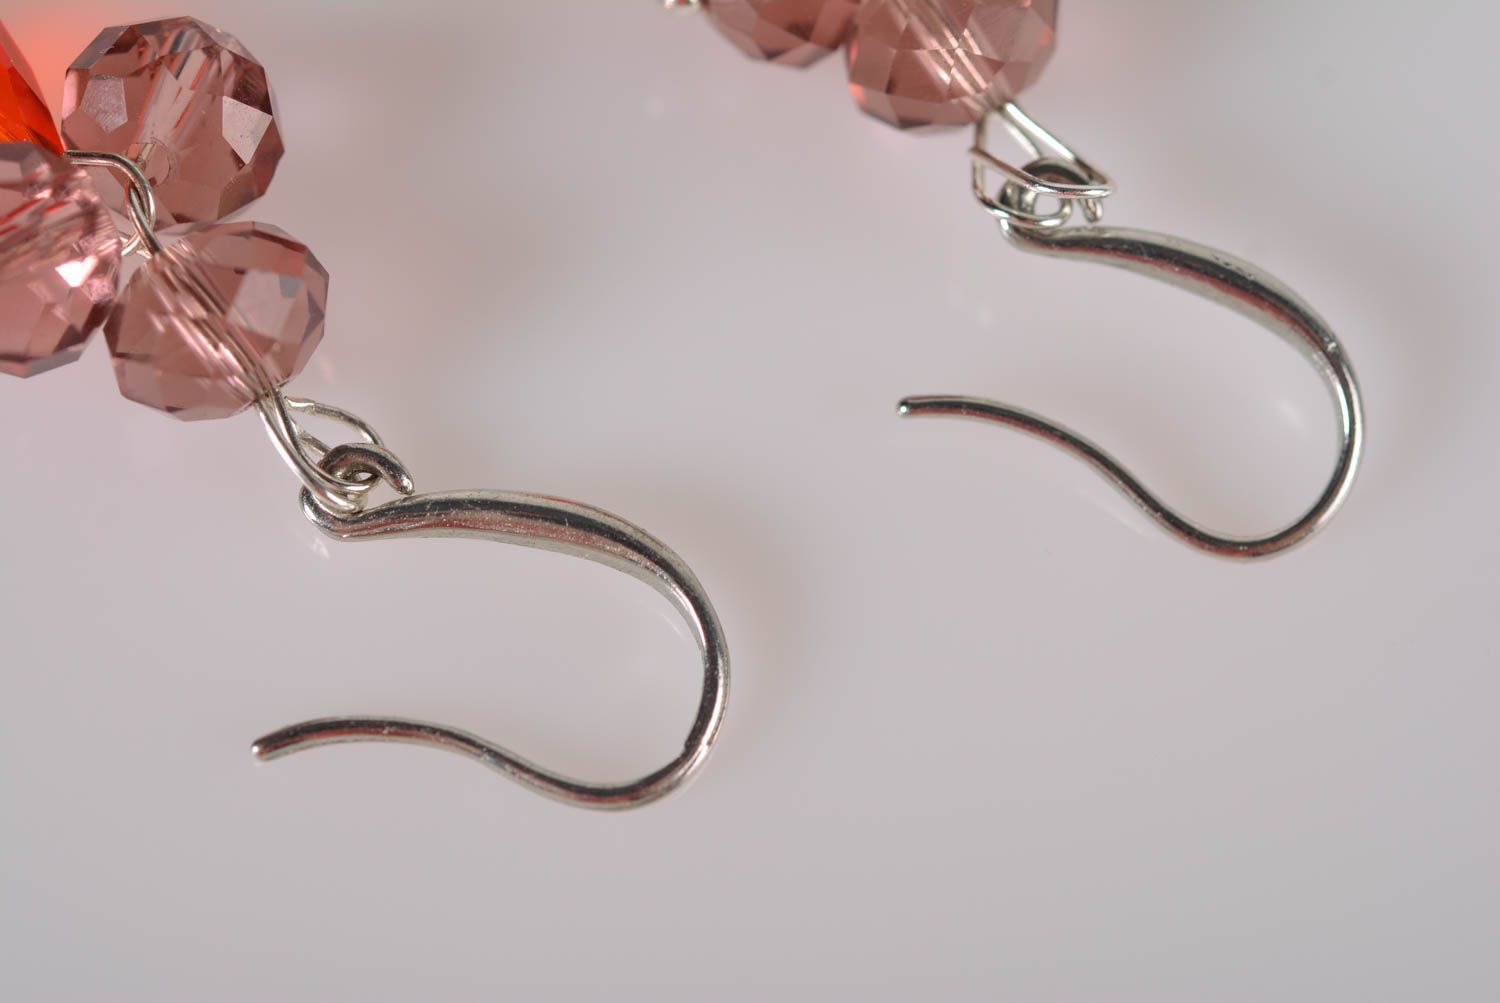 Handmade earrings glass jewelry dangling earrings fashion accessories gift ideas photo 5